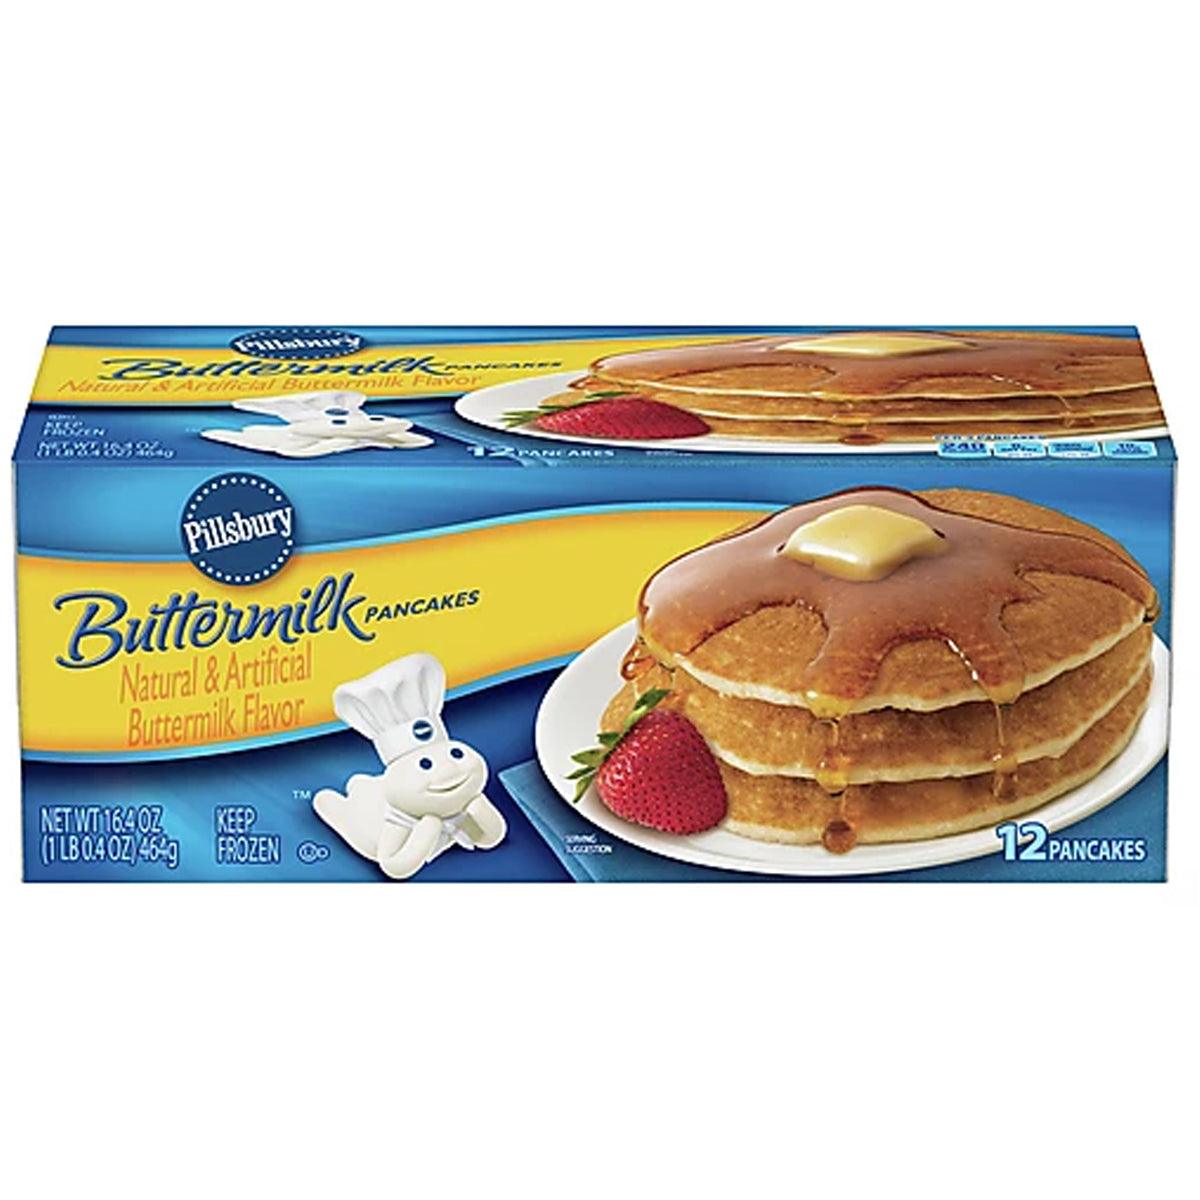 Pillsbury Buttermilk Pancakes 16.4oz